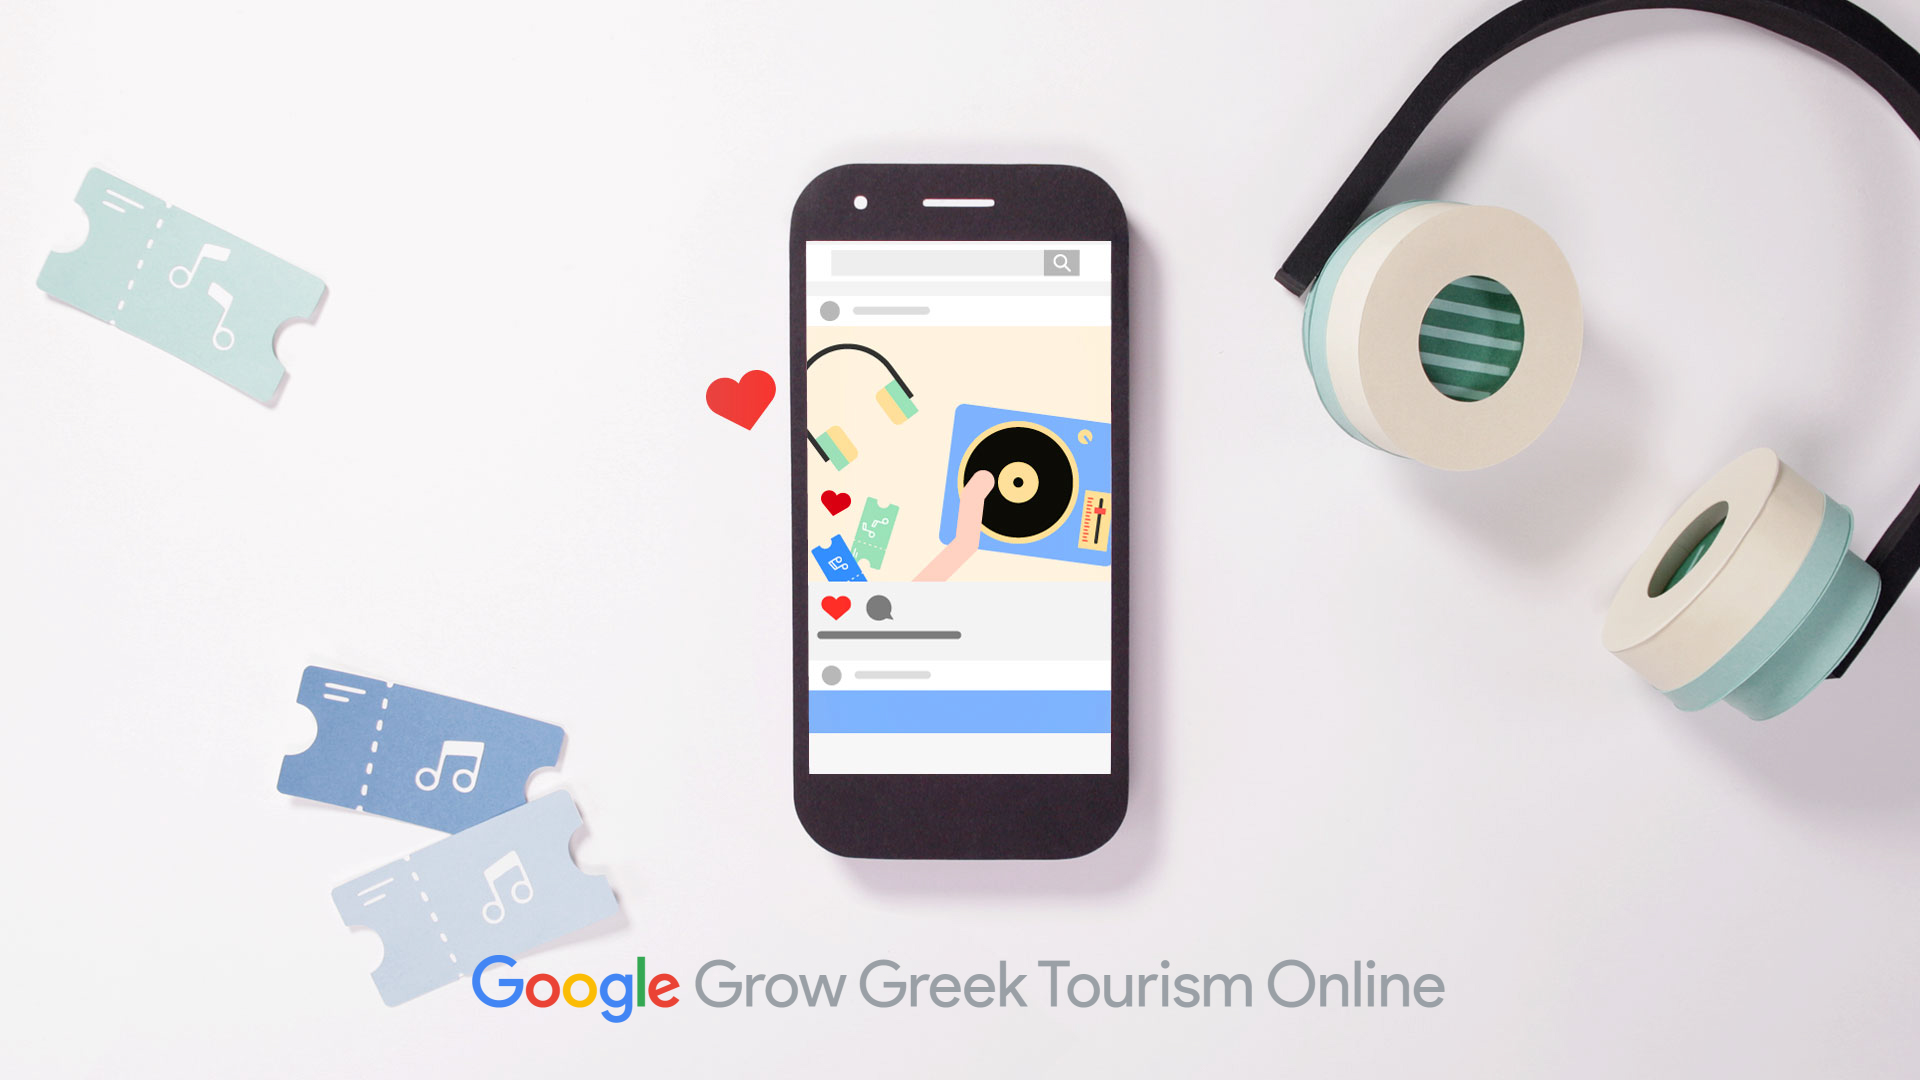 Google Grow Greek Tourism Online